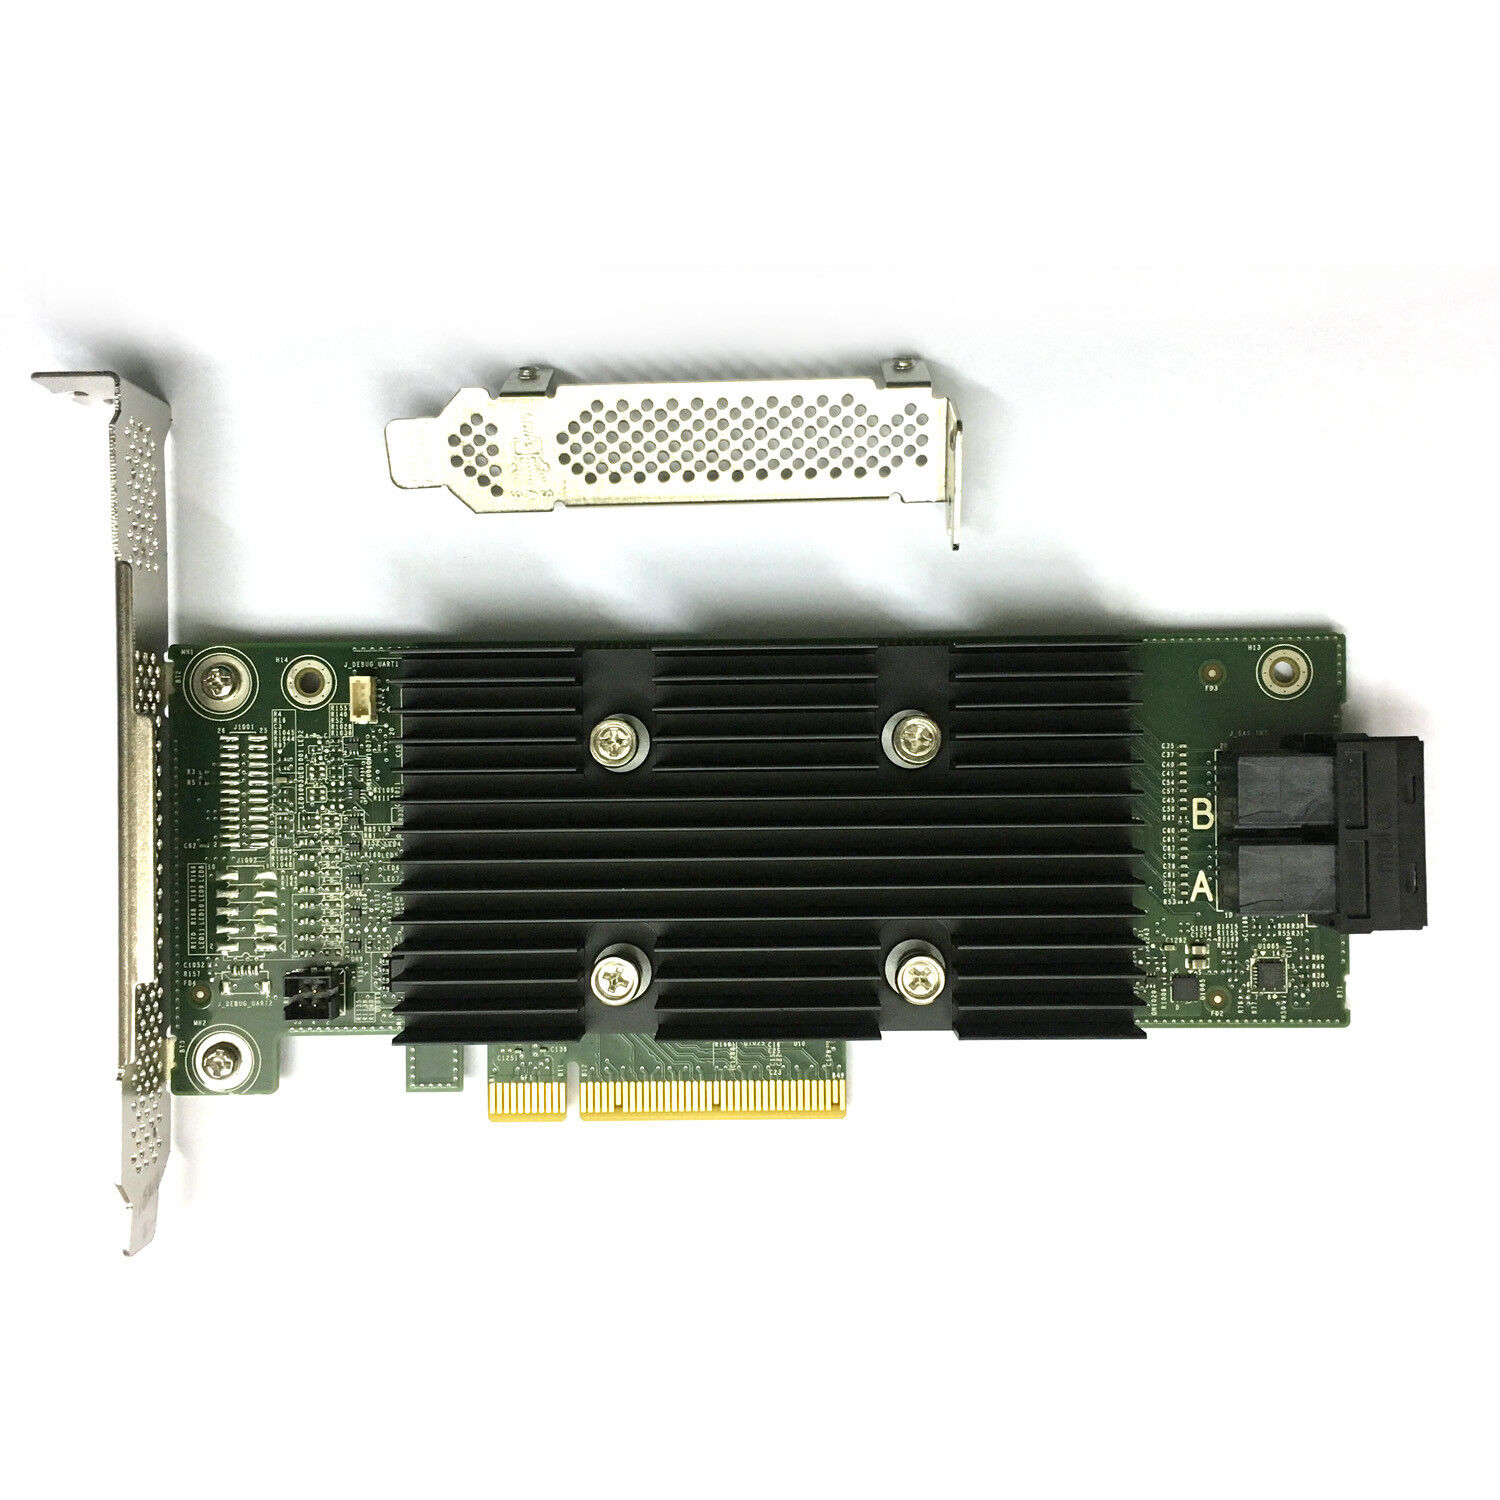 4Y5H1 DELL PERC H330 12GB/S PCI-EXPRESS 3.0 SAS RAID CONTROLLER CARD 04Y5H1